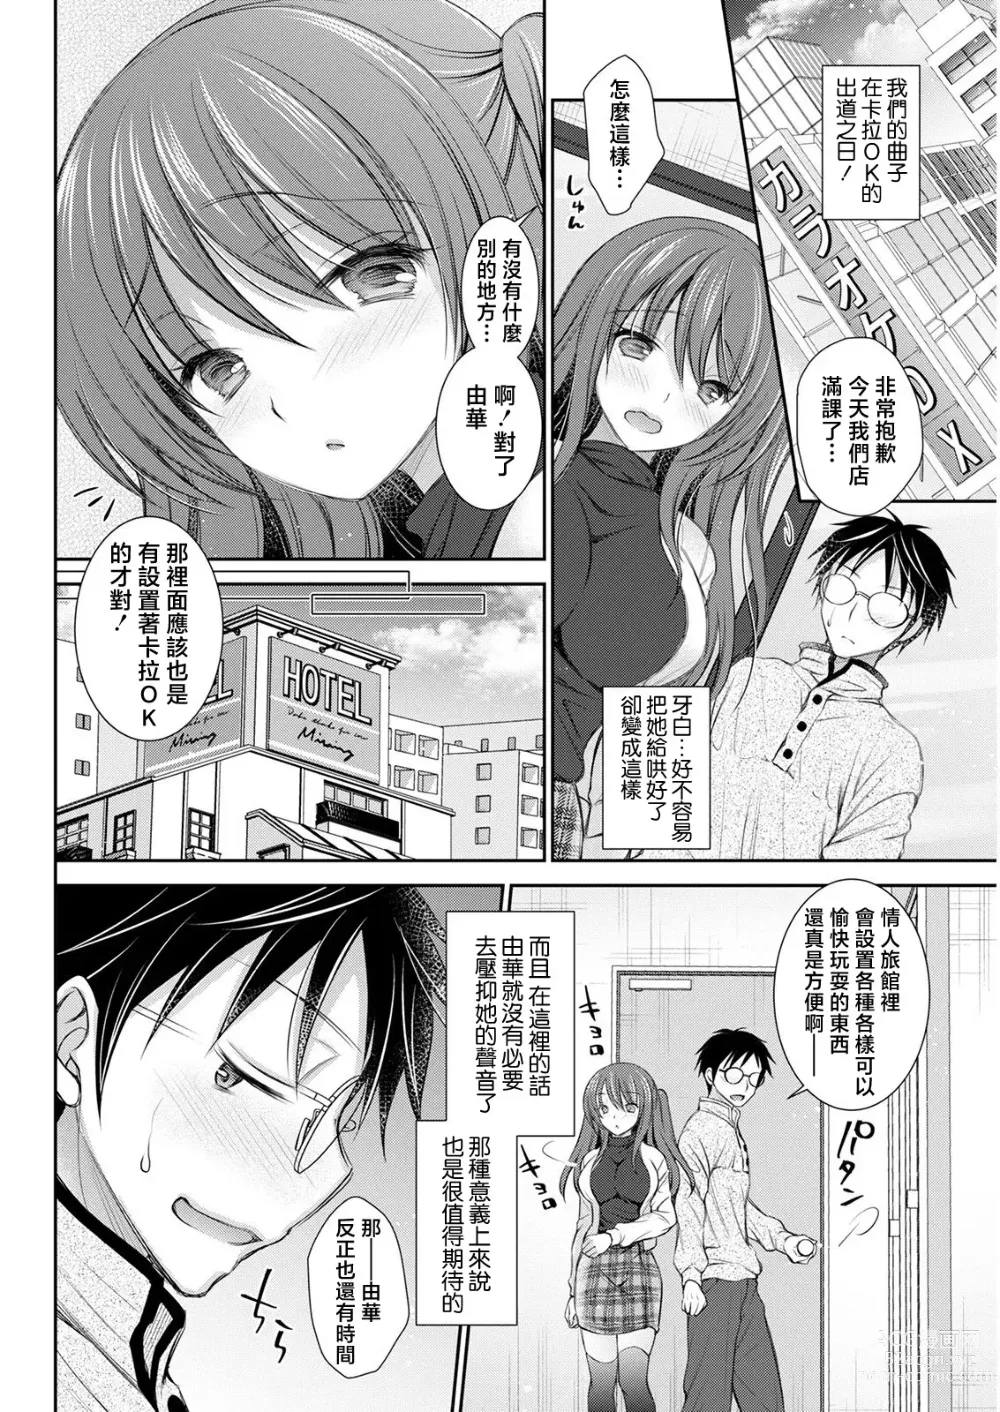 Page 6 of manga Koe o Kikasete